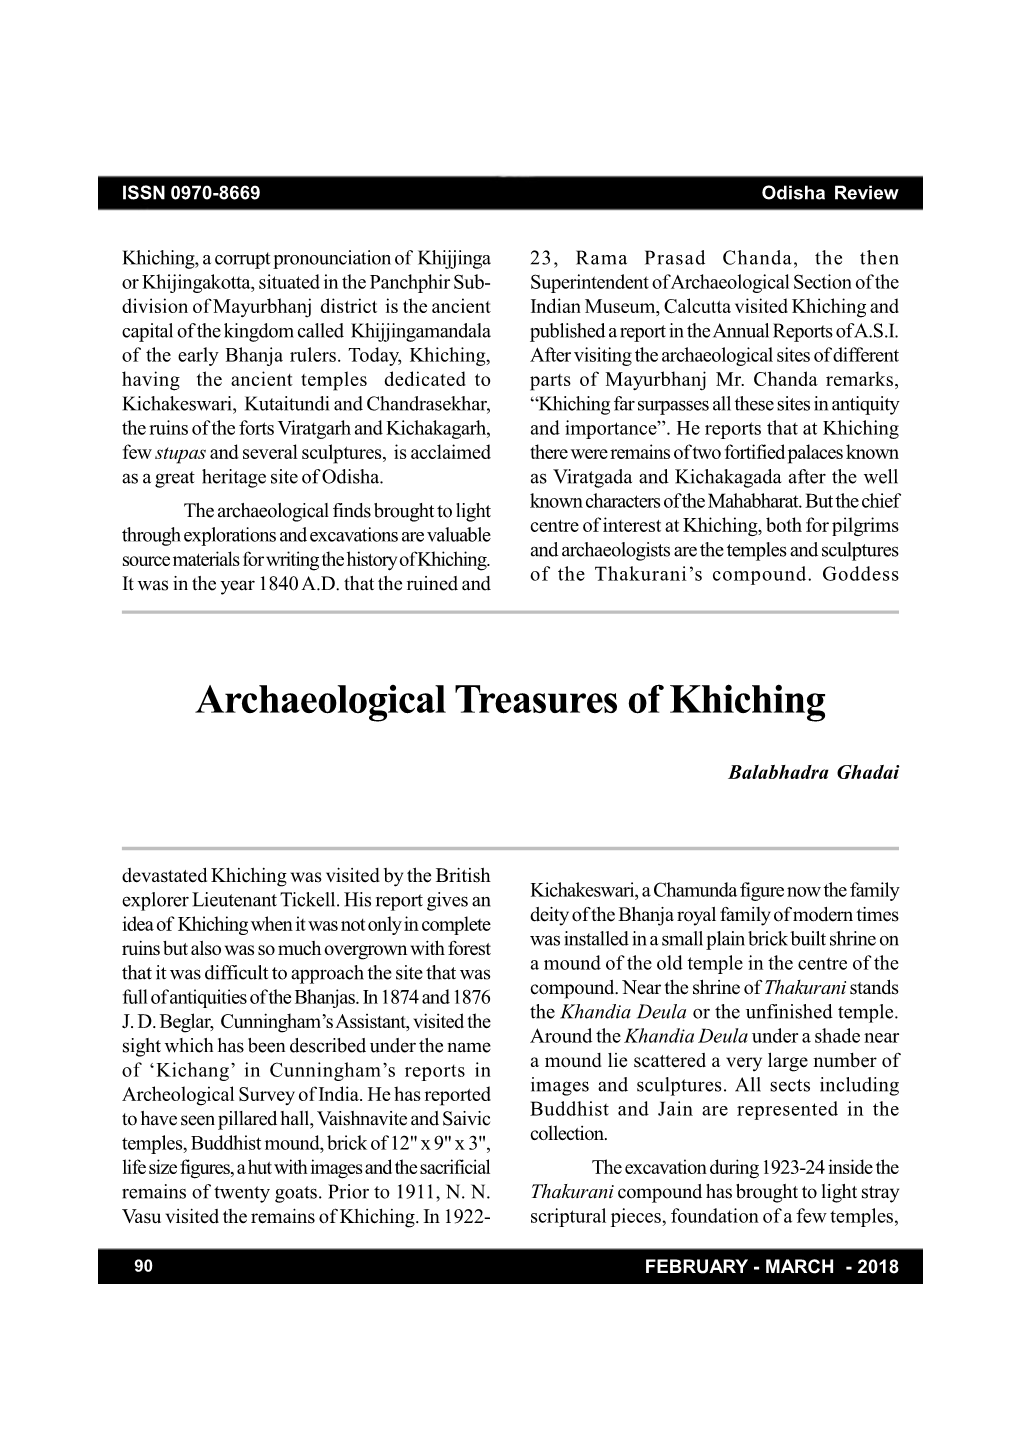 Archaeological Treasures of Khiching